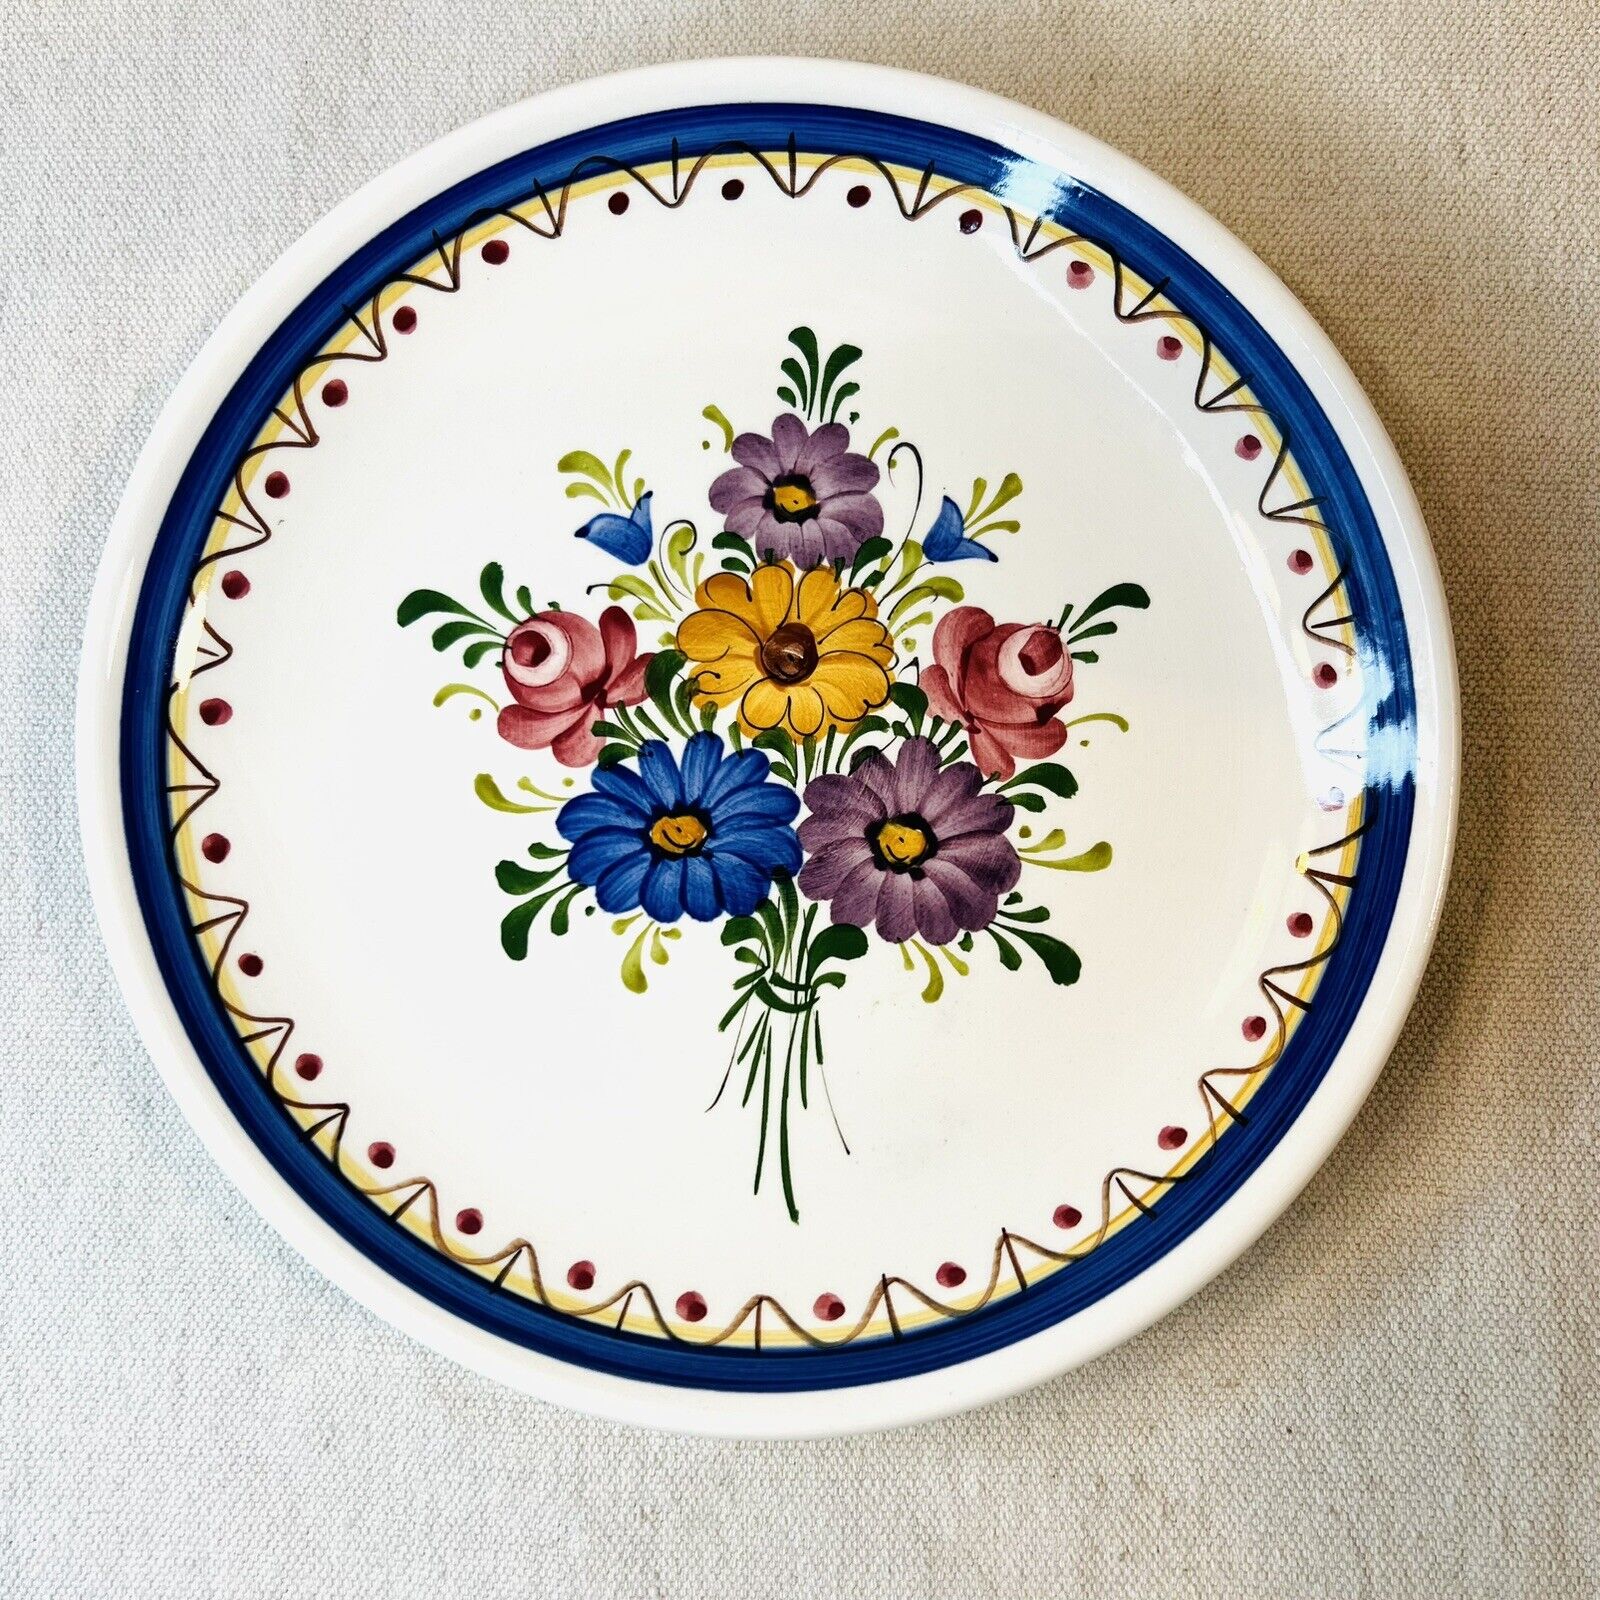 Vintage Plate - Wechsler-Tirolkeramik Schwaz - Hand Painted 1960s - Beautiful